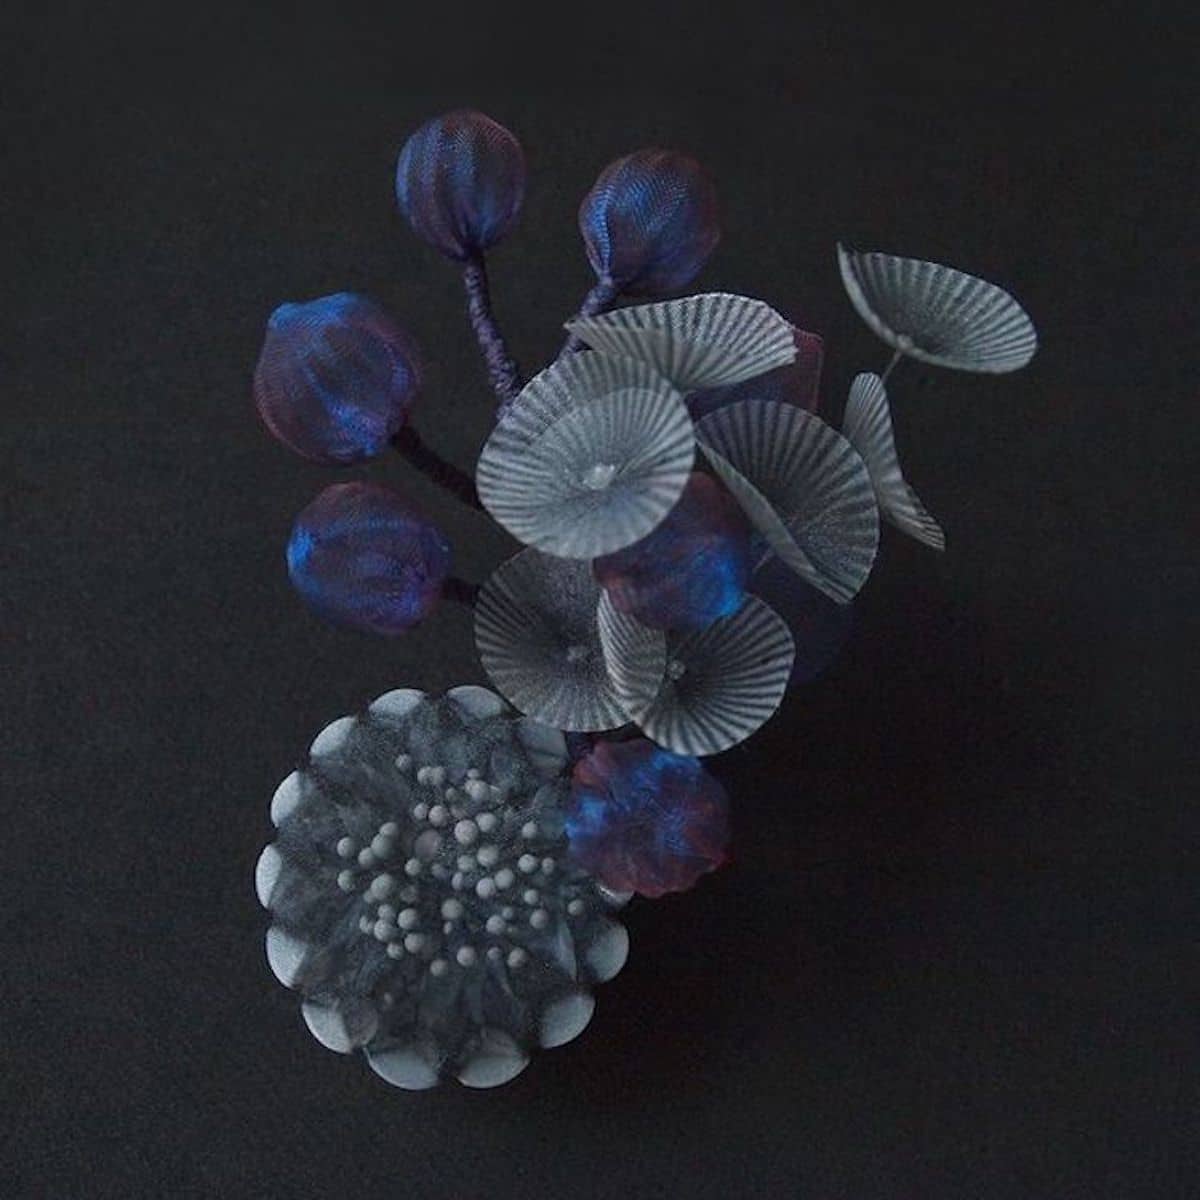 Fabric Sculptures by Mariko Kusumoto